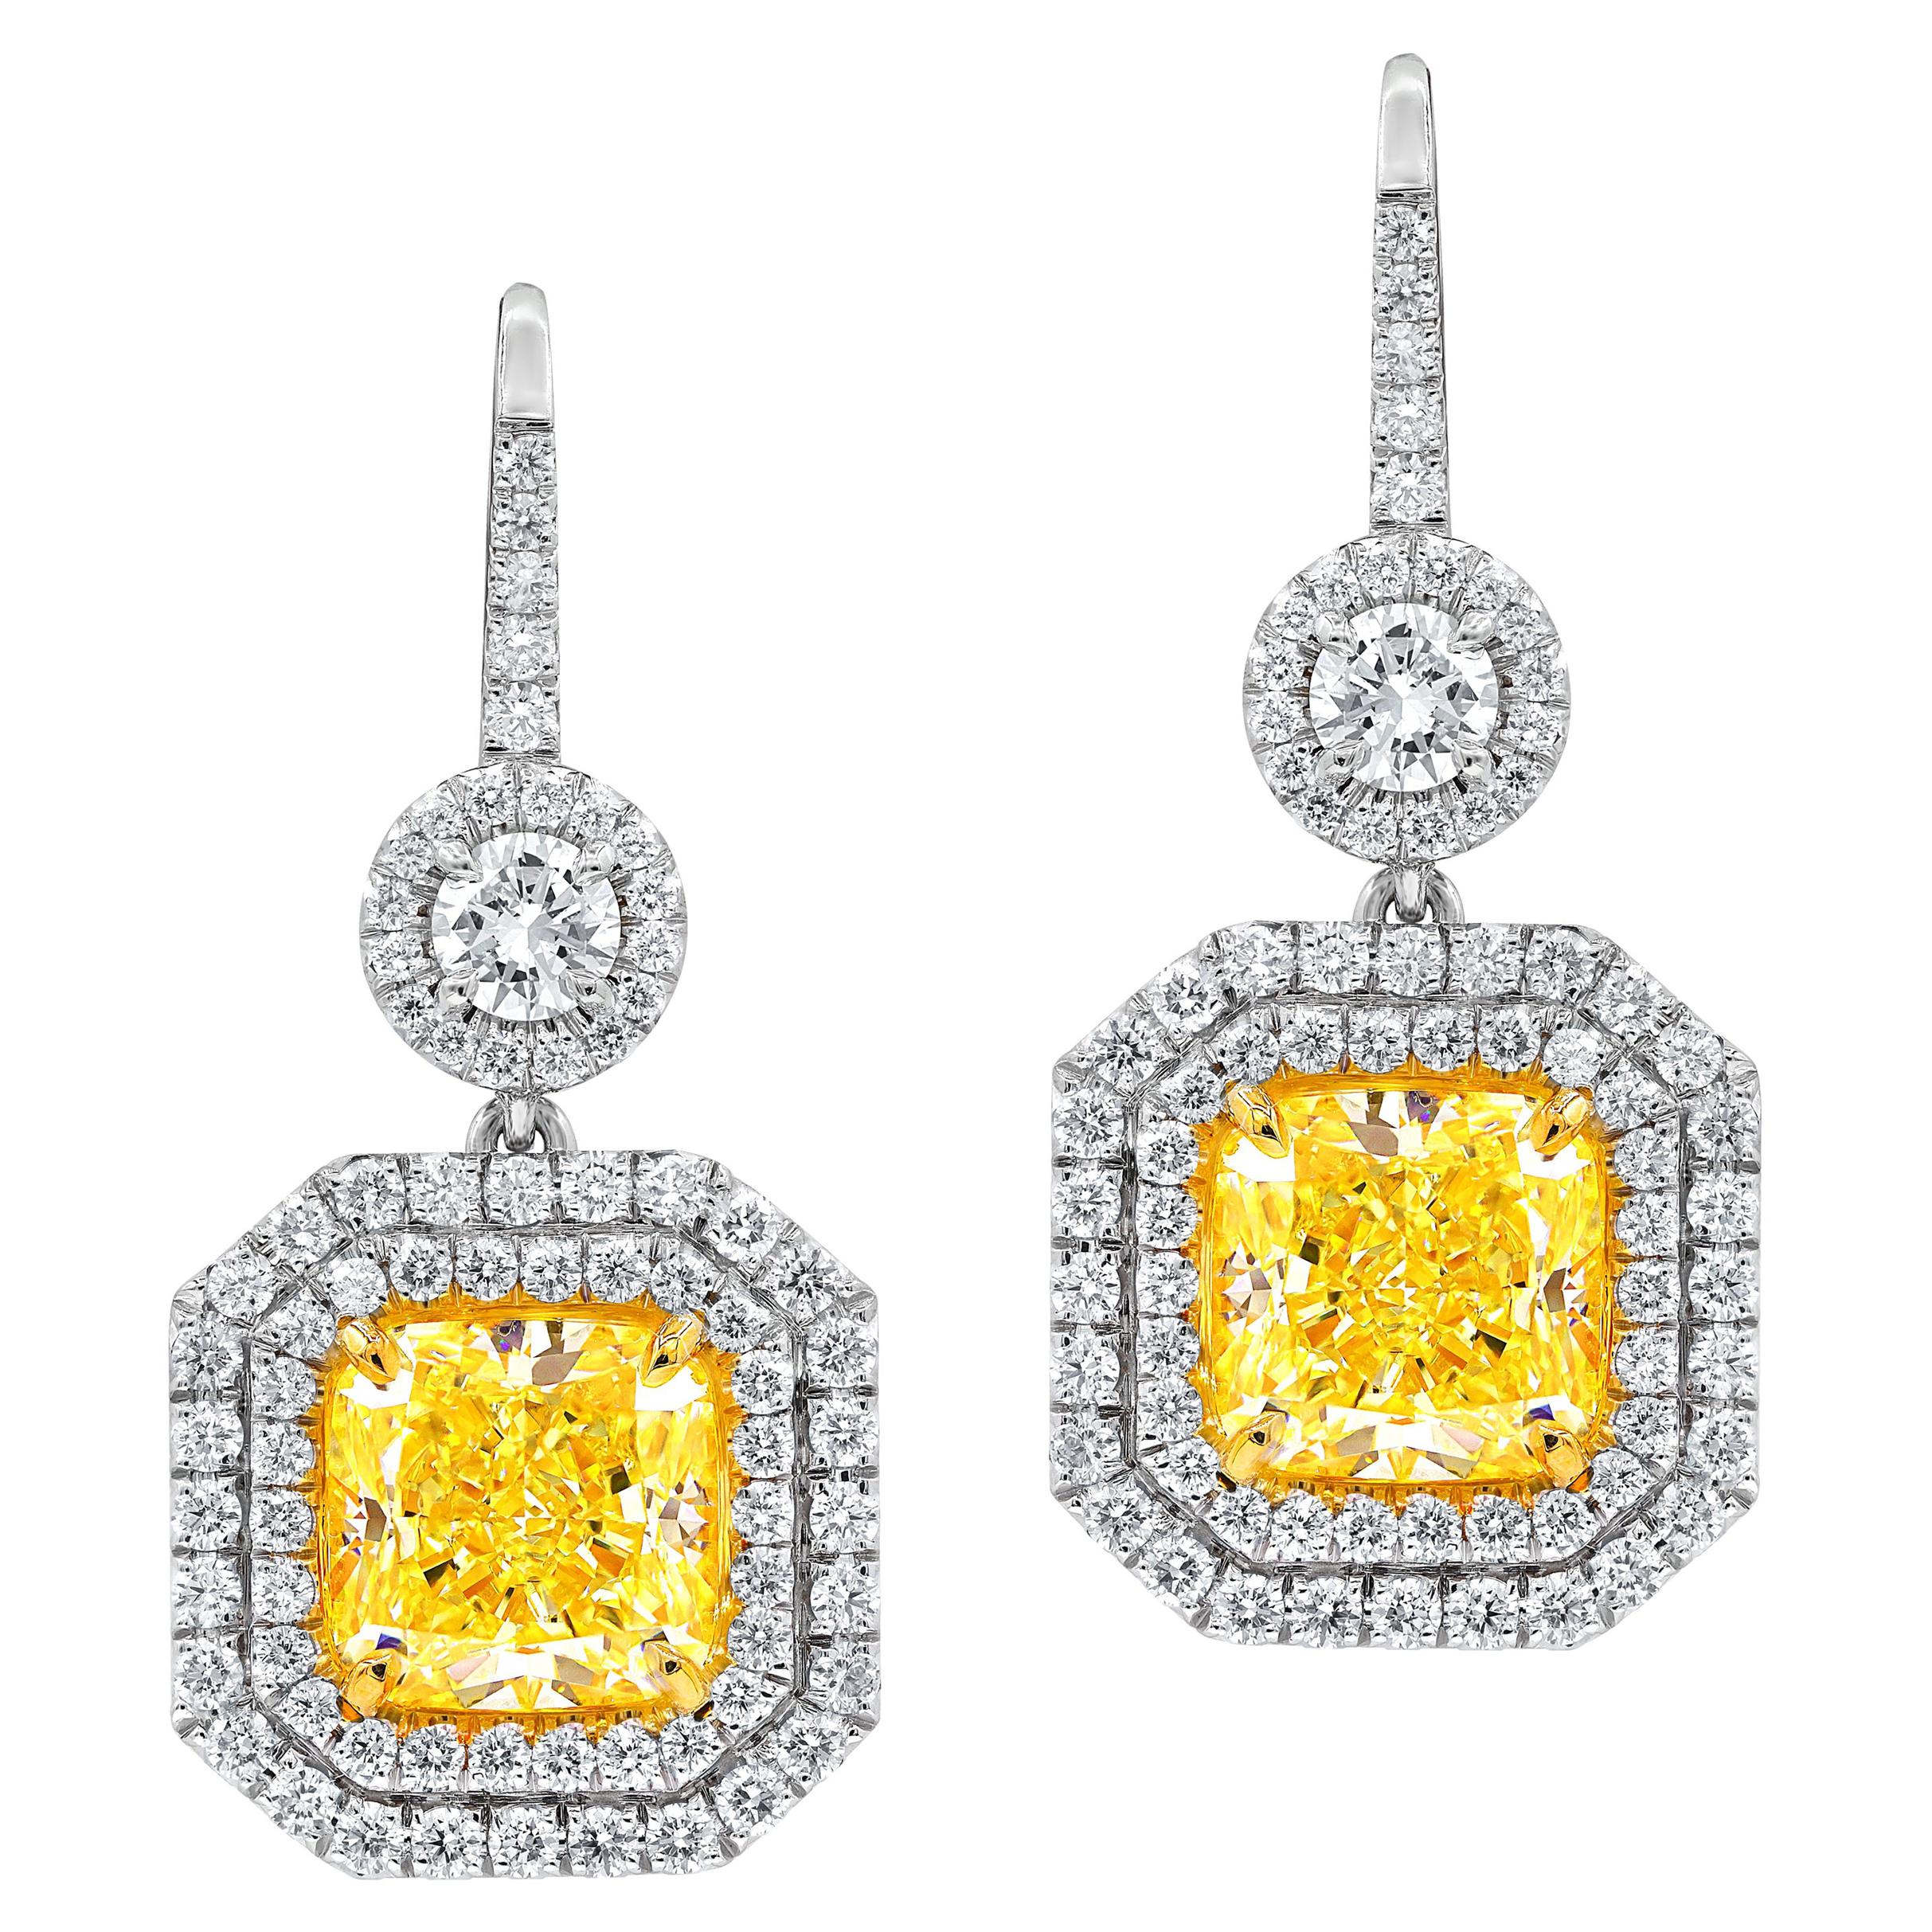 GIA Certified 5.63 Carat Canary Yellow Diamond Earrings